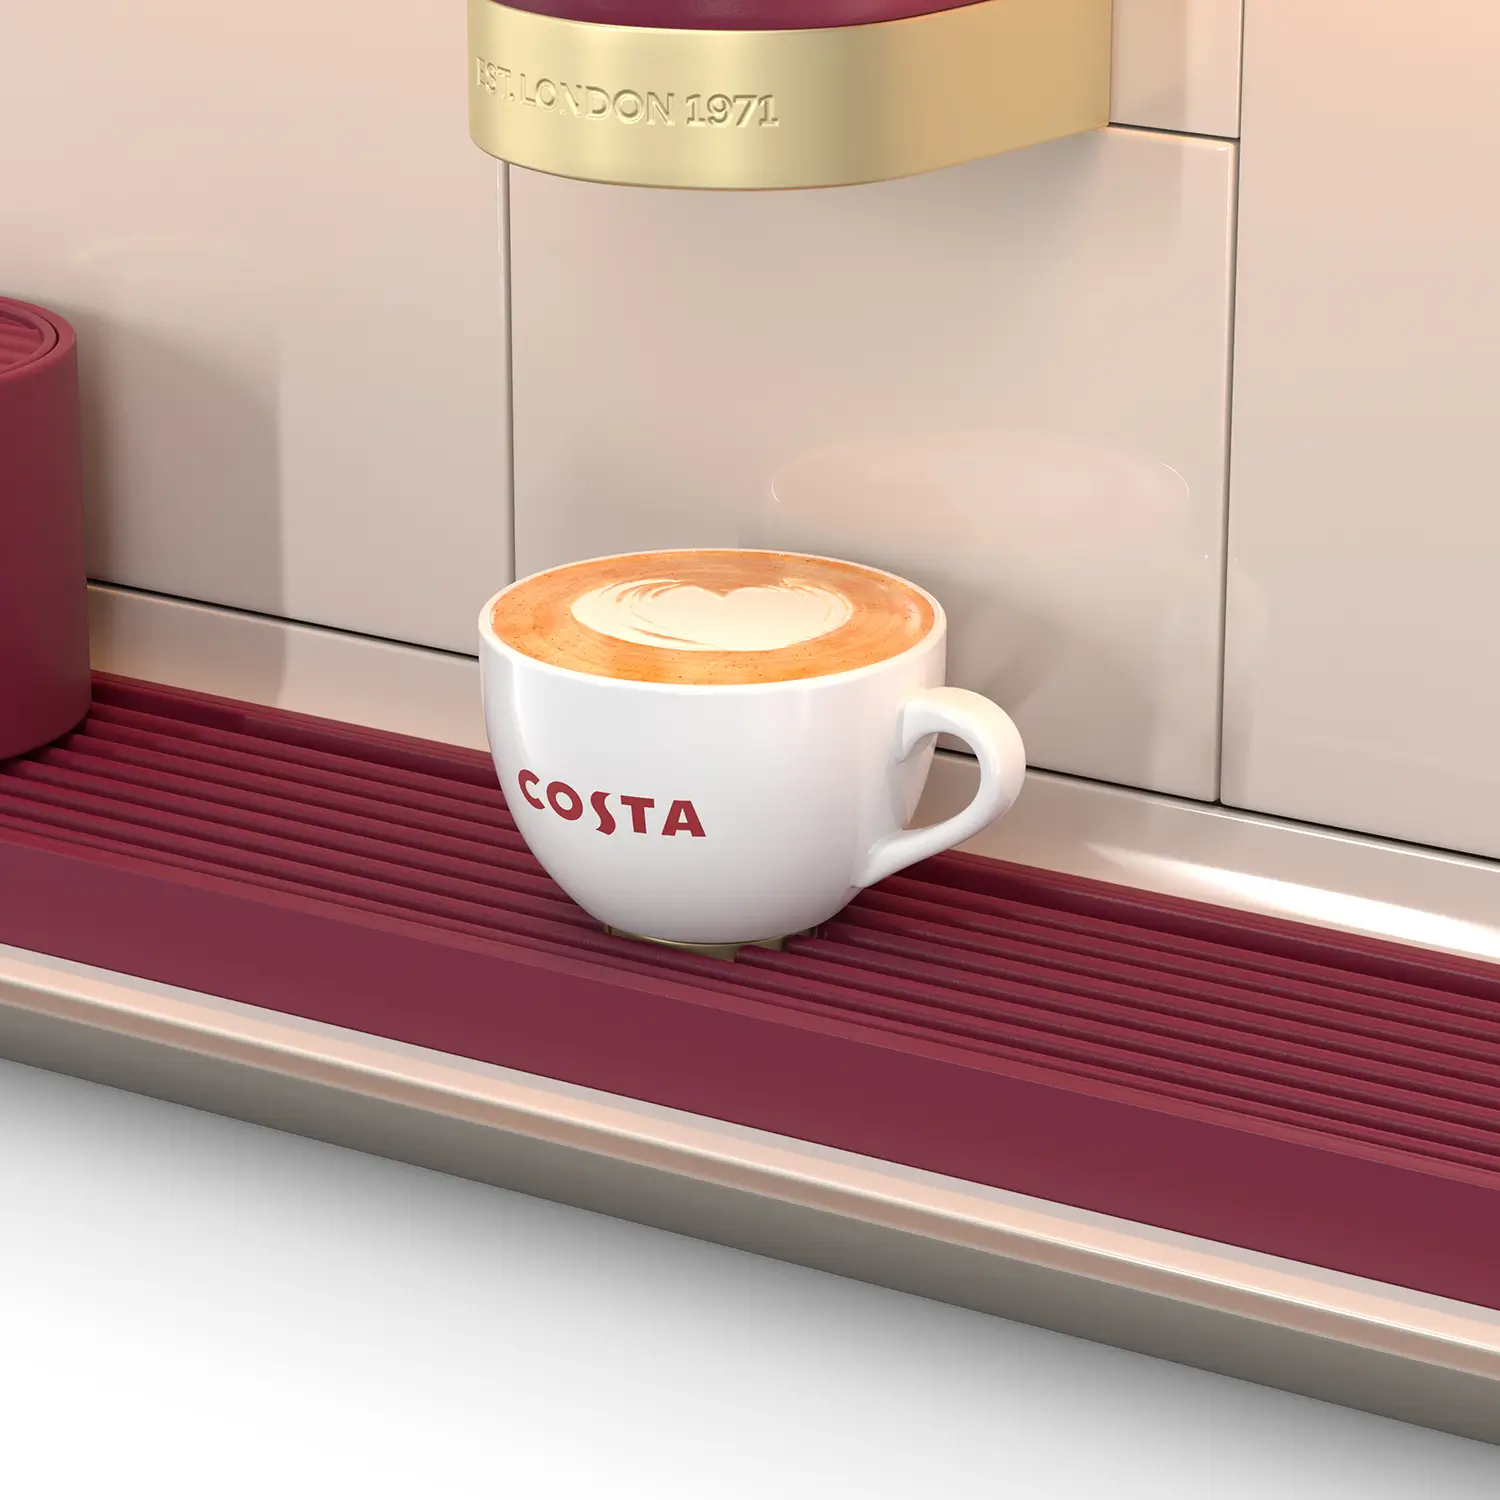 costa_coffee_cup_3d_rendering